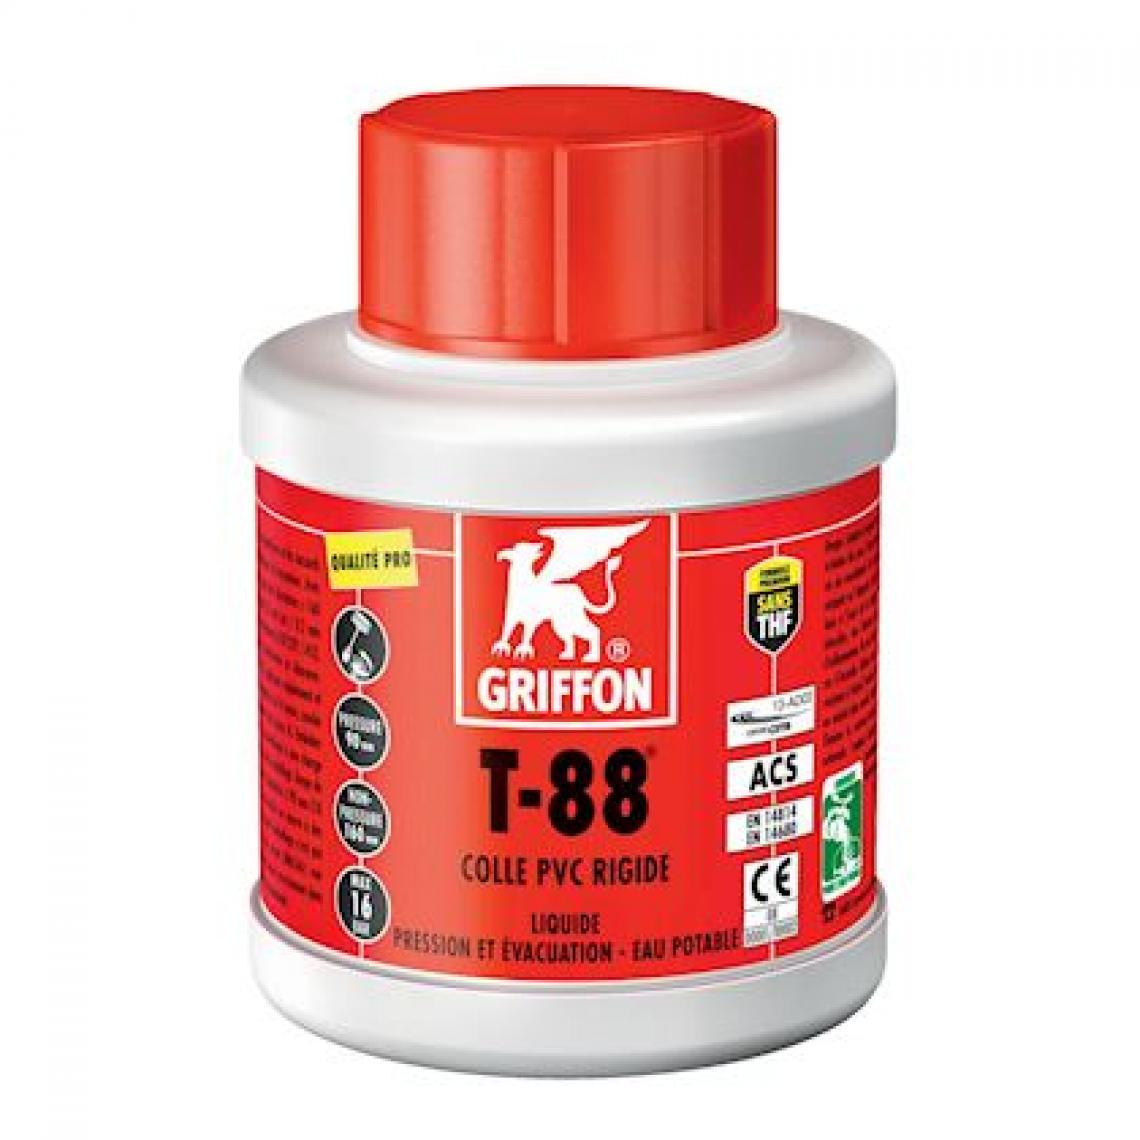 Griffon - colle pvc - griffon t-88 - liquide - bidon de 250 ml - griffon 6302439 - Mastic, silicone, joint